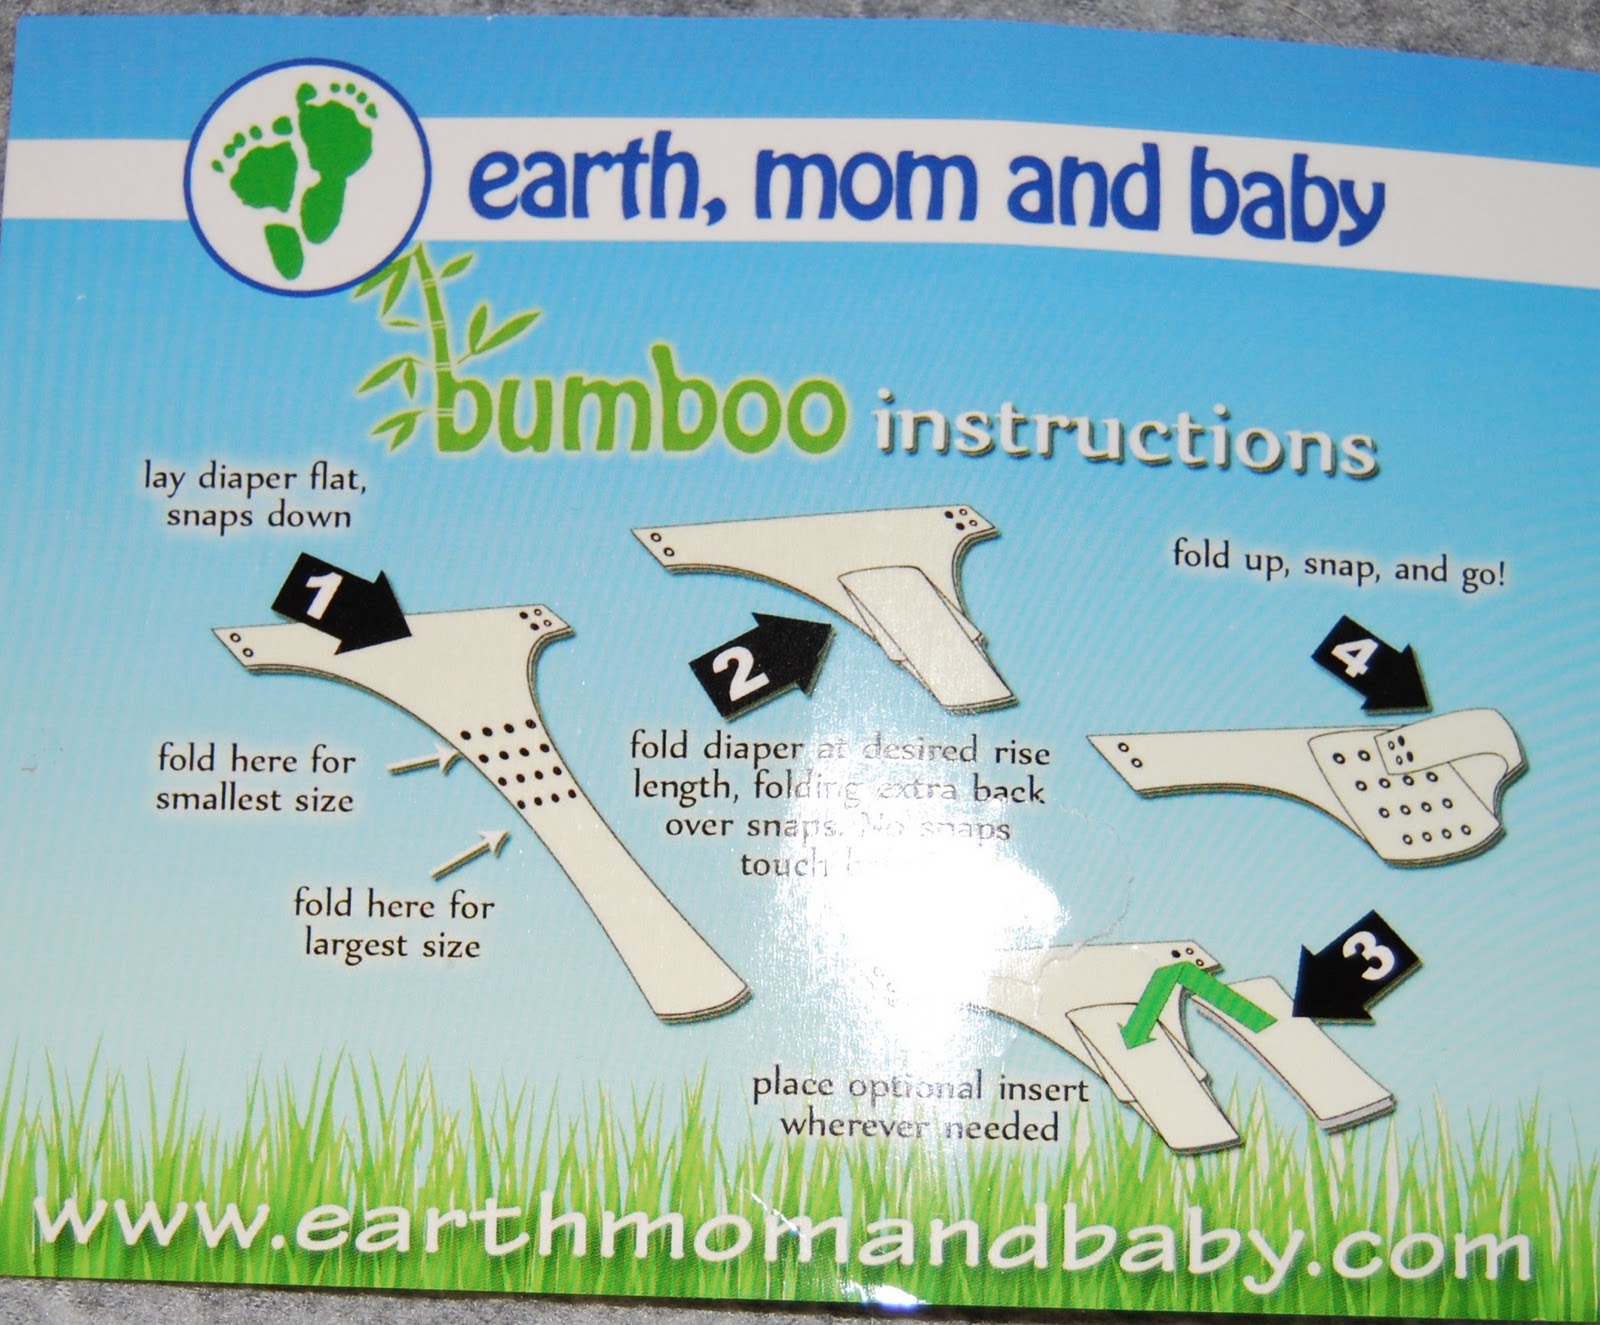 Bumboo Diapers Canada